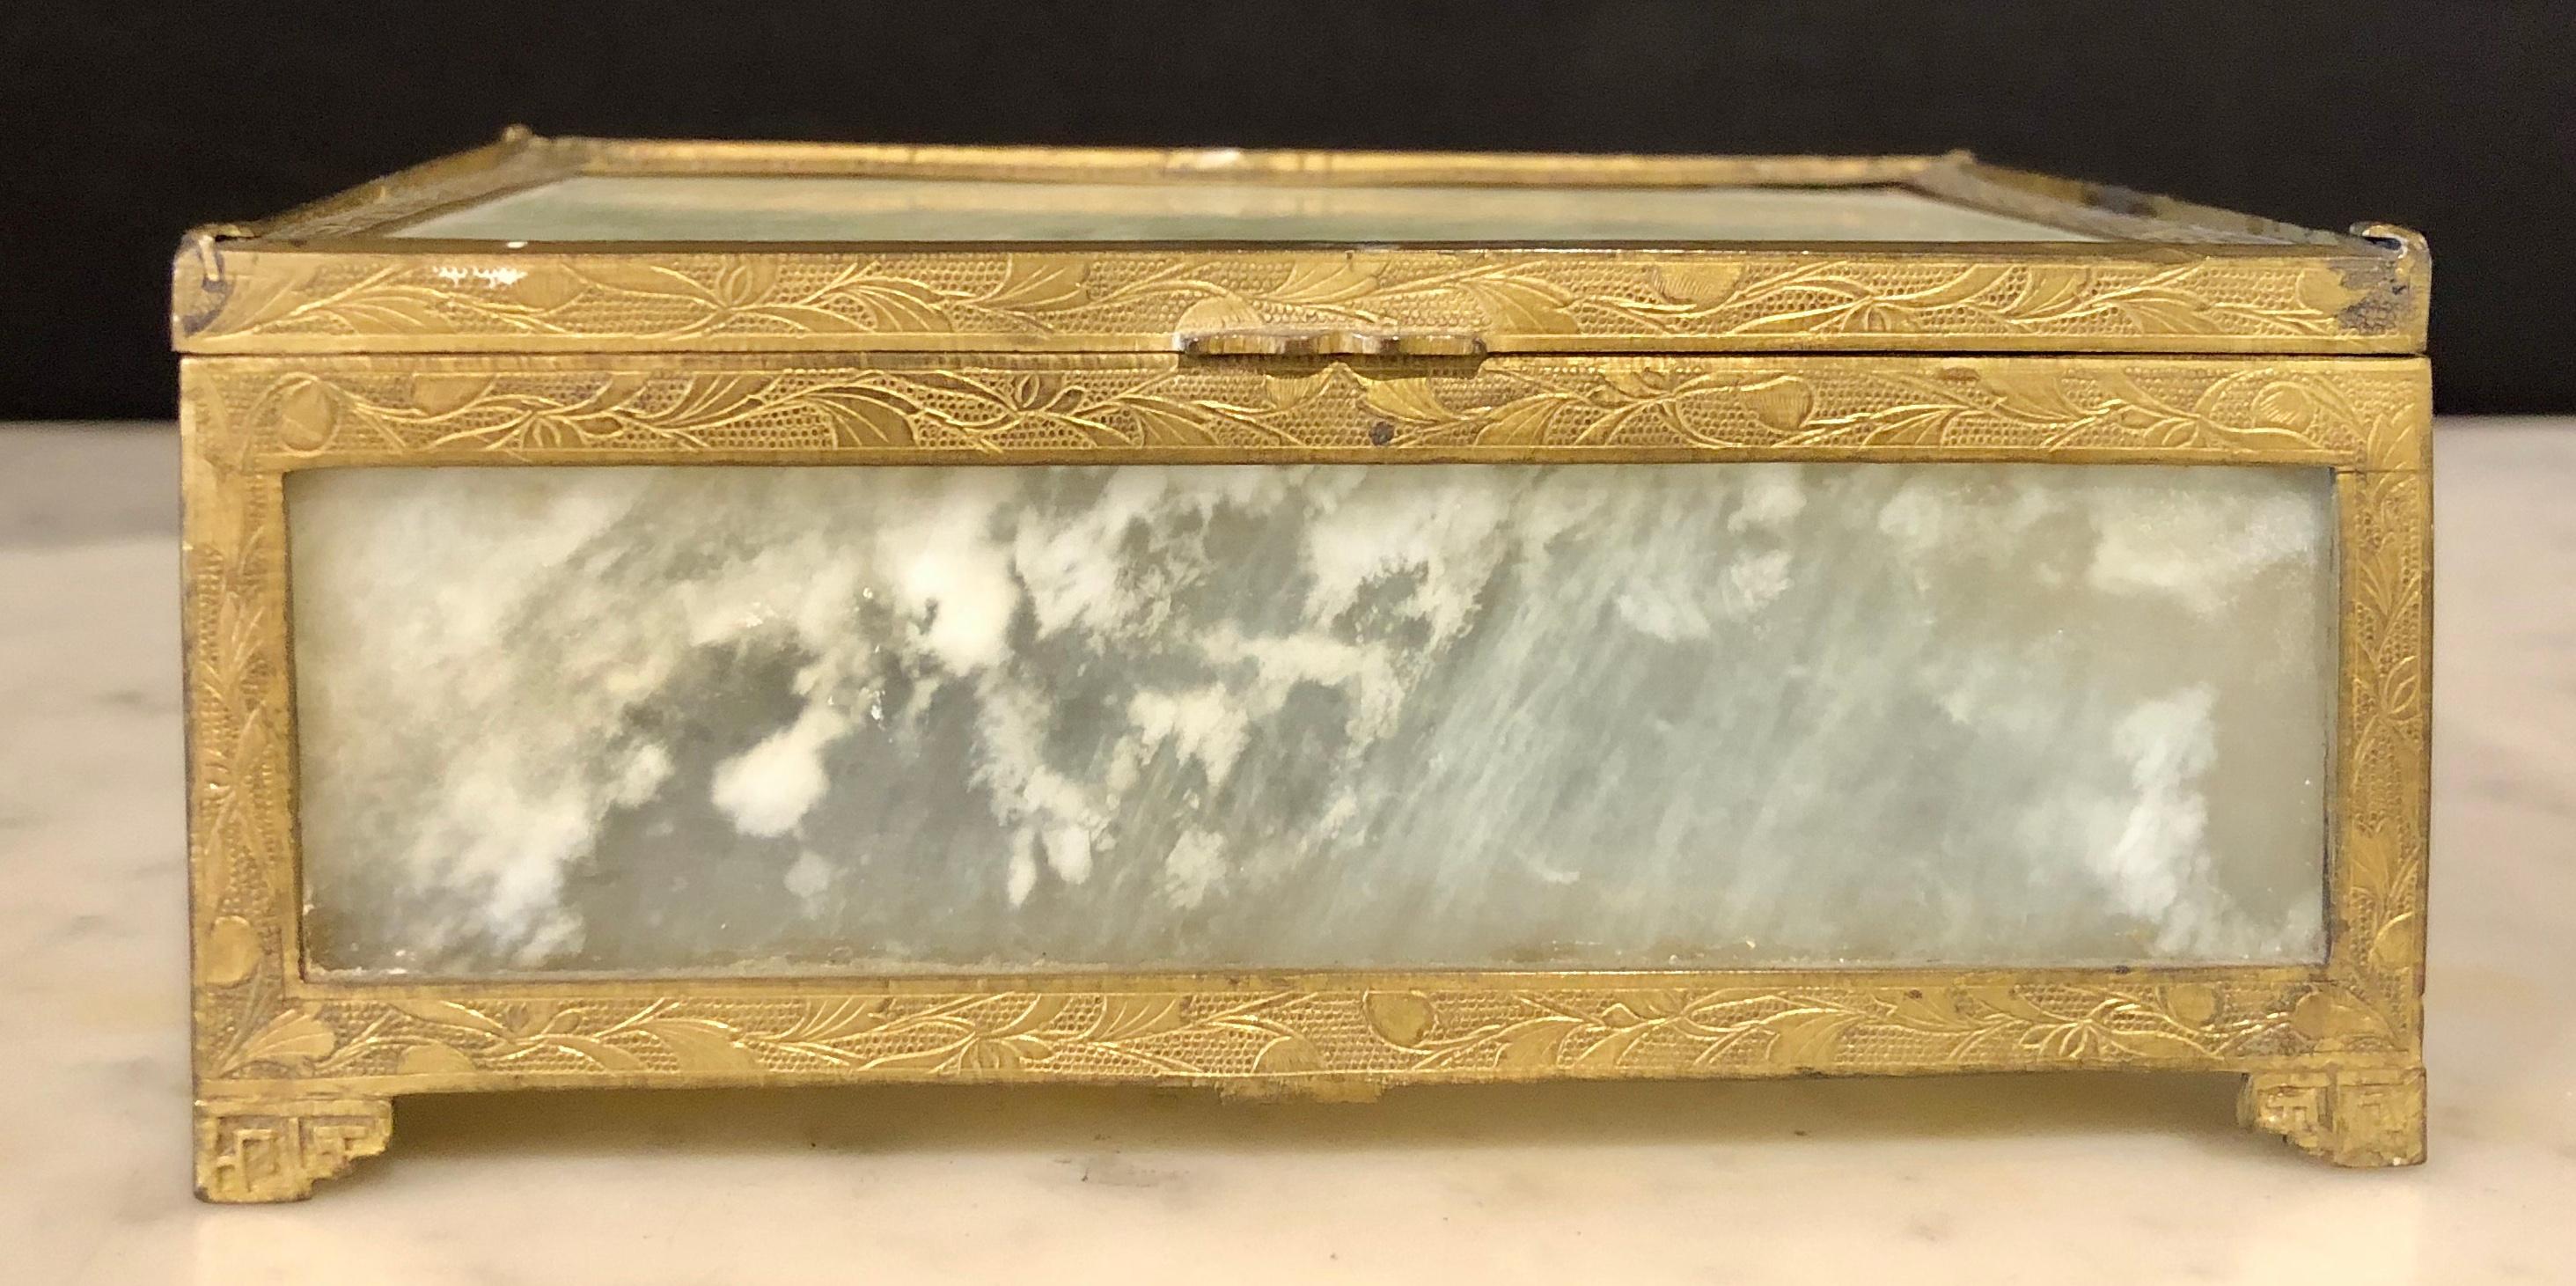 Chinese Export Chinese Jade and Gilt Metal Vanity Box, Casket Box